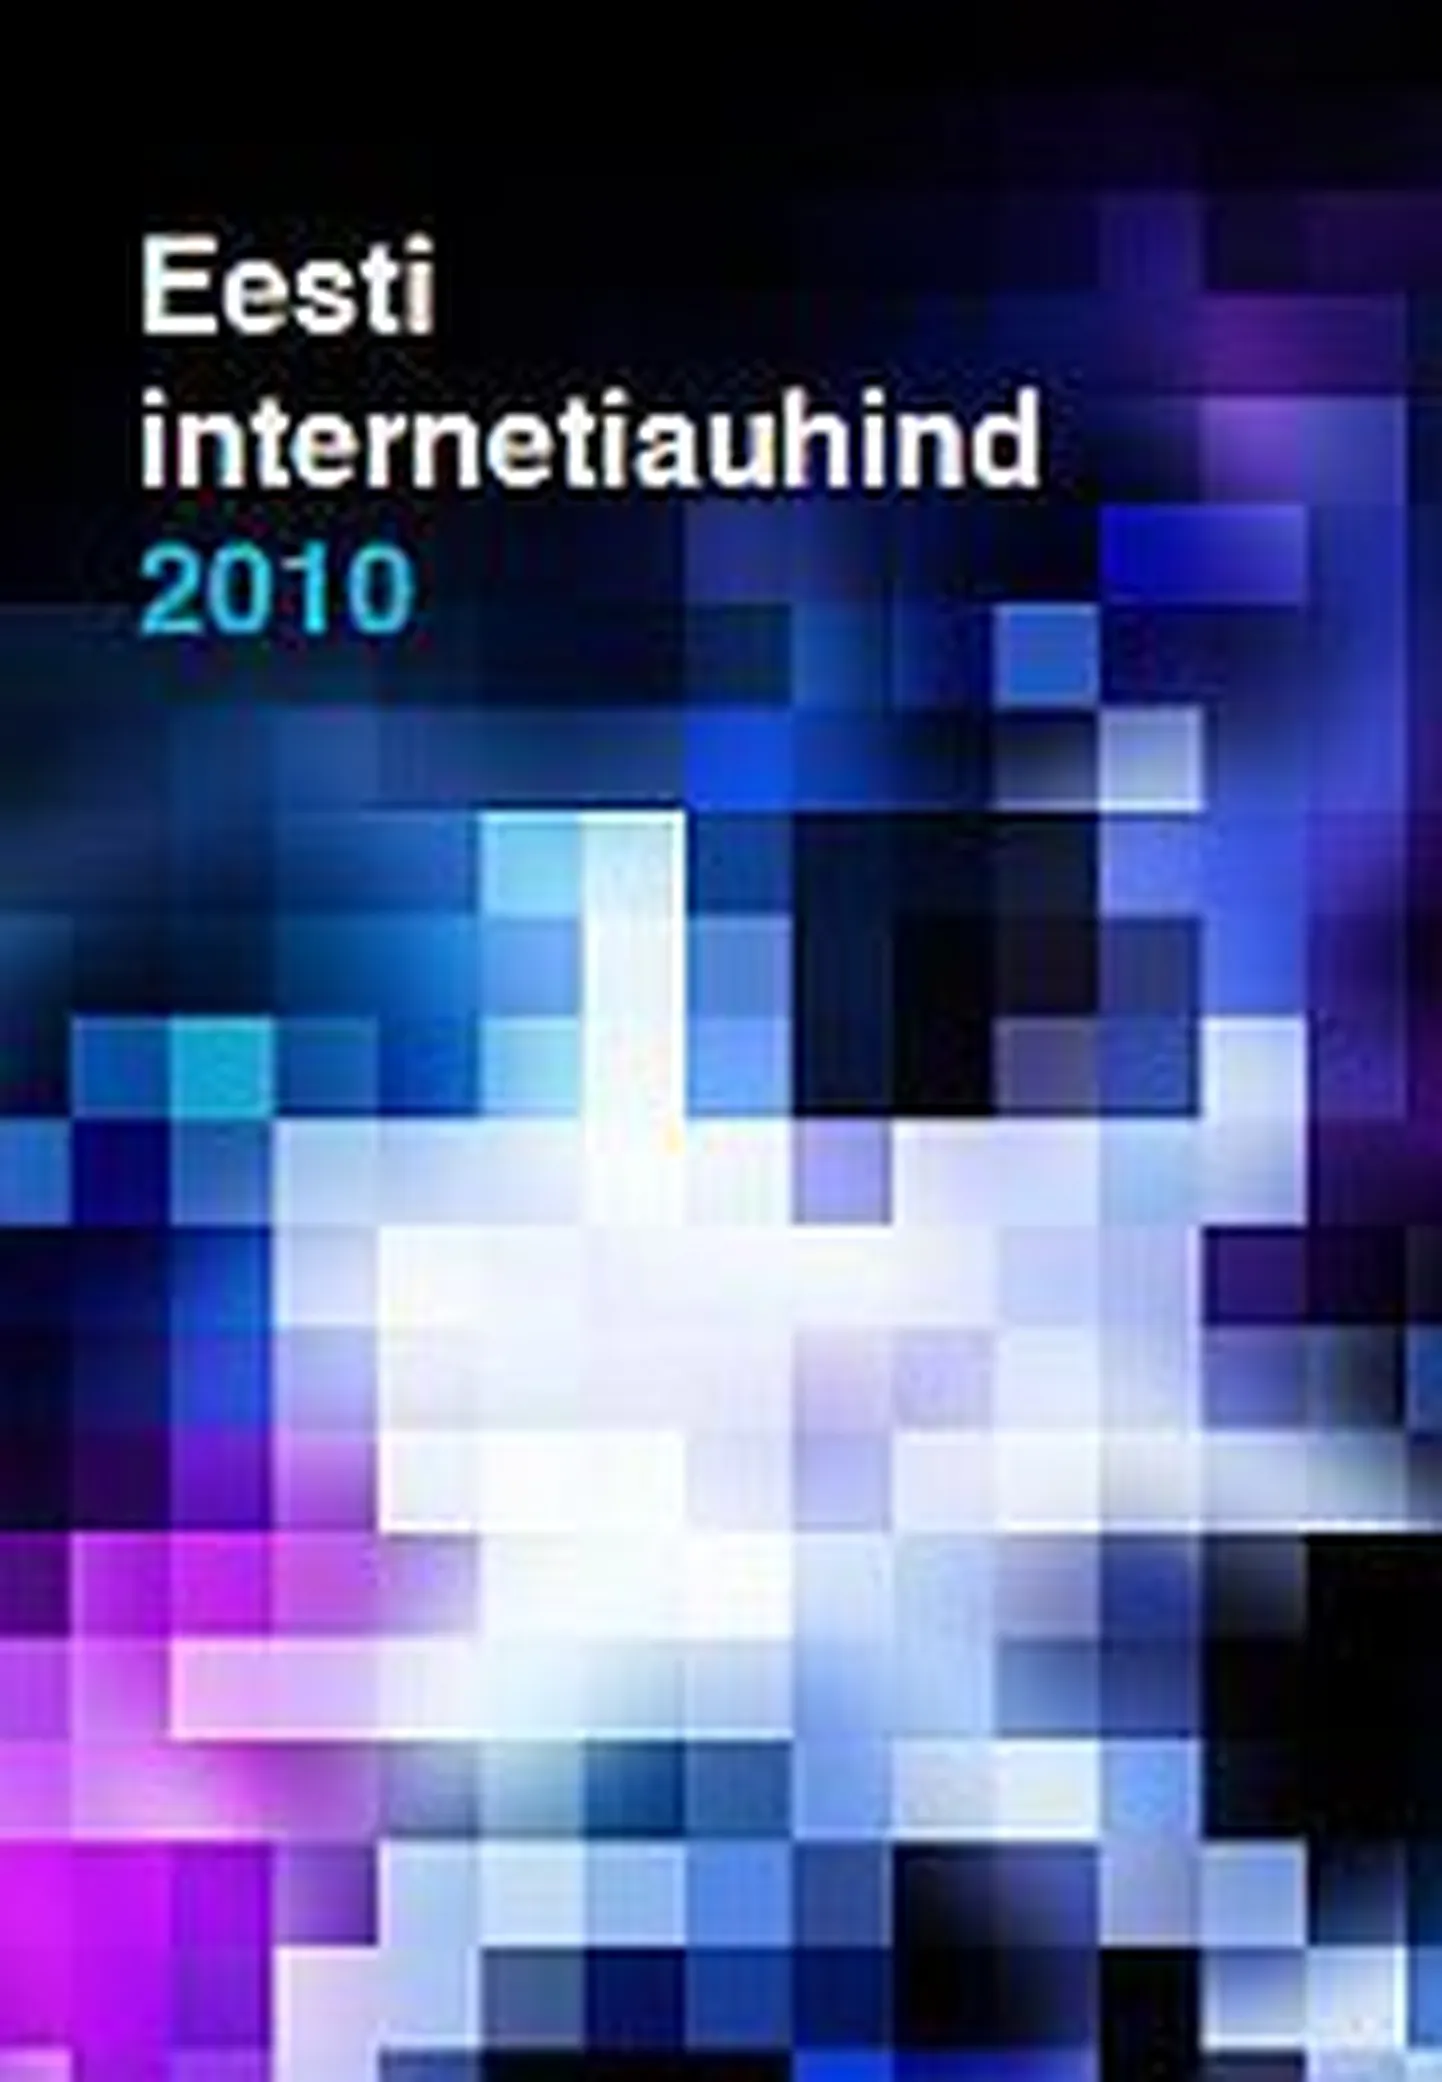 Eesti Internetiauhind 2010 logo.